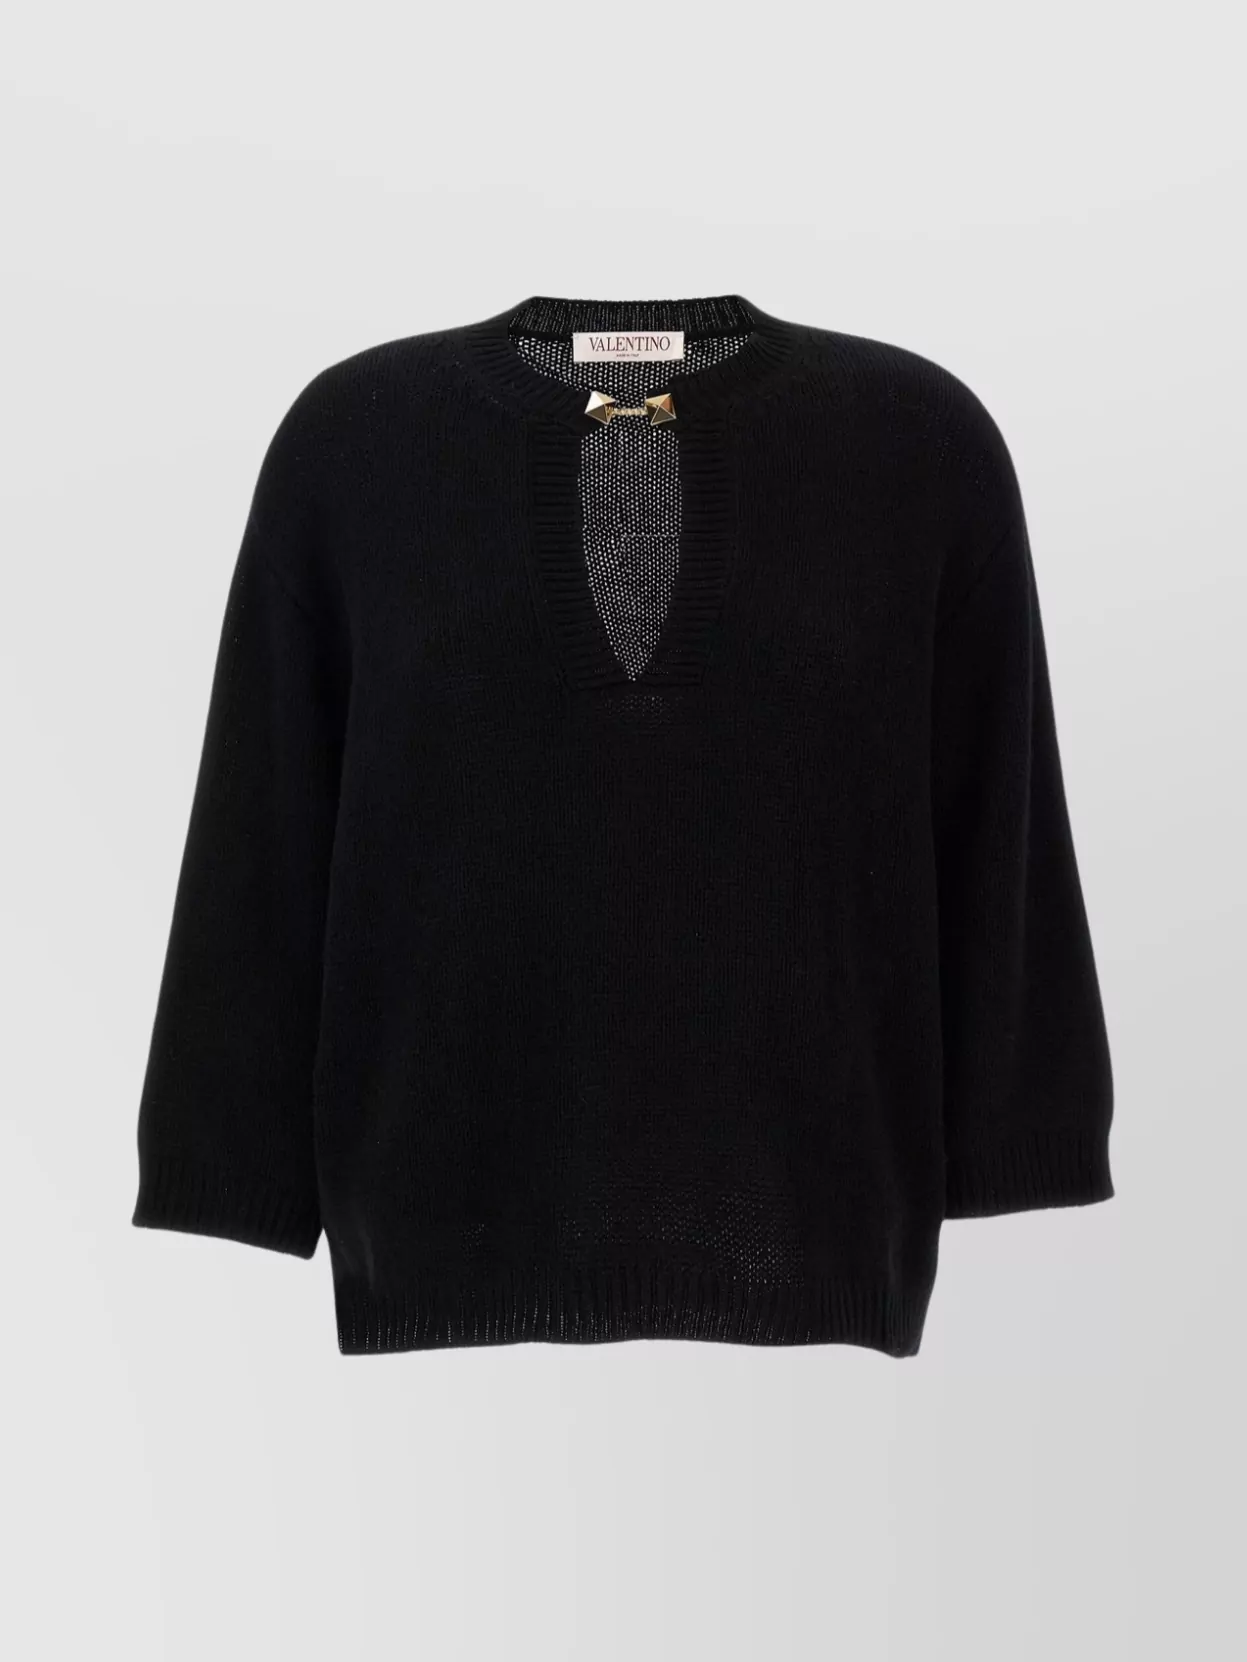 Valentino Keyhole Neck Studded Sweater In Black